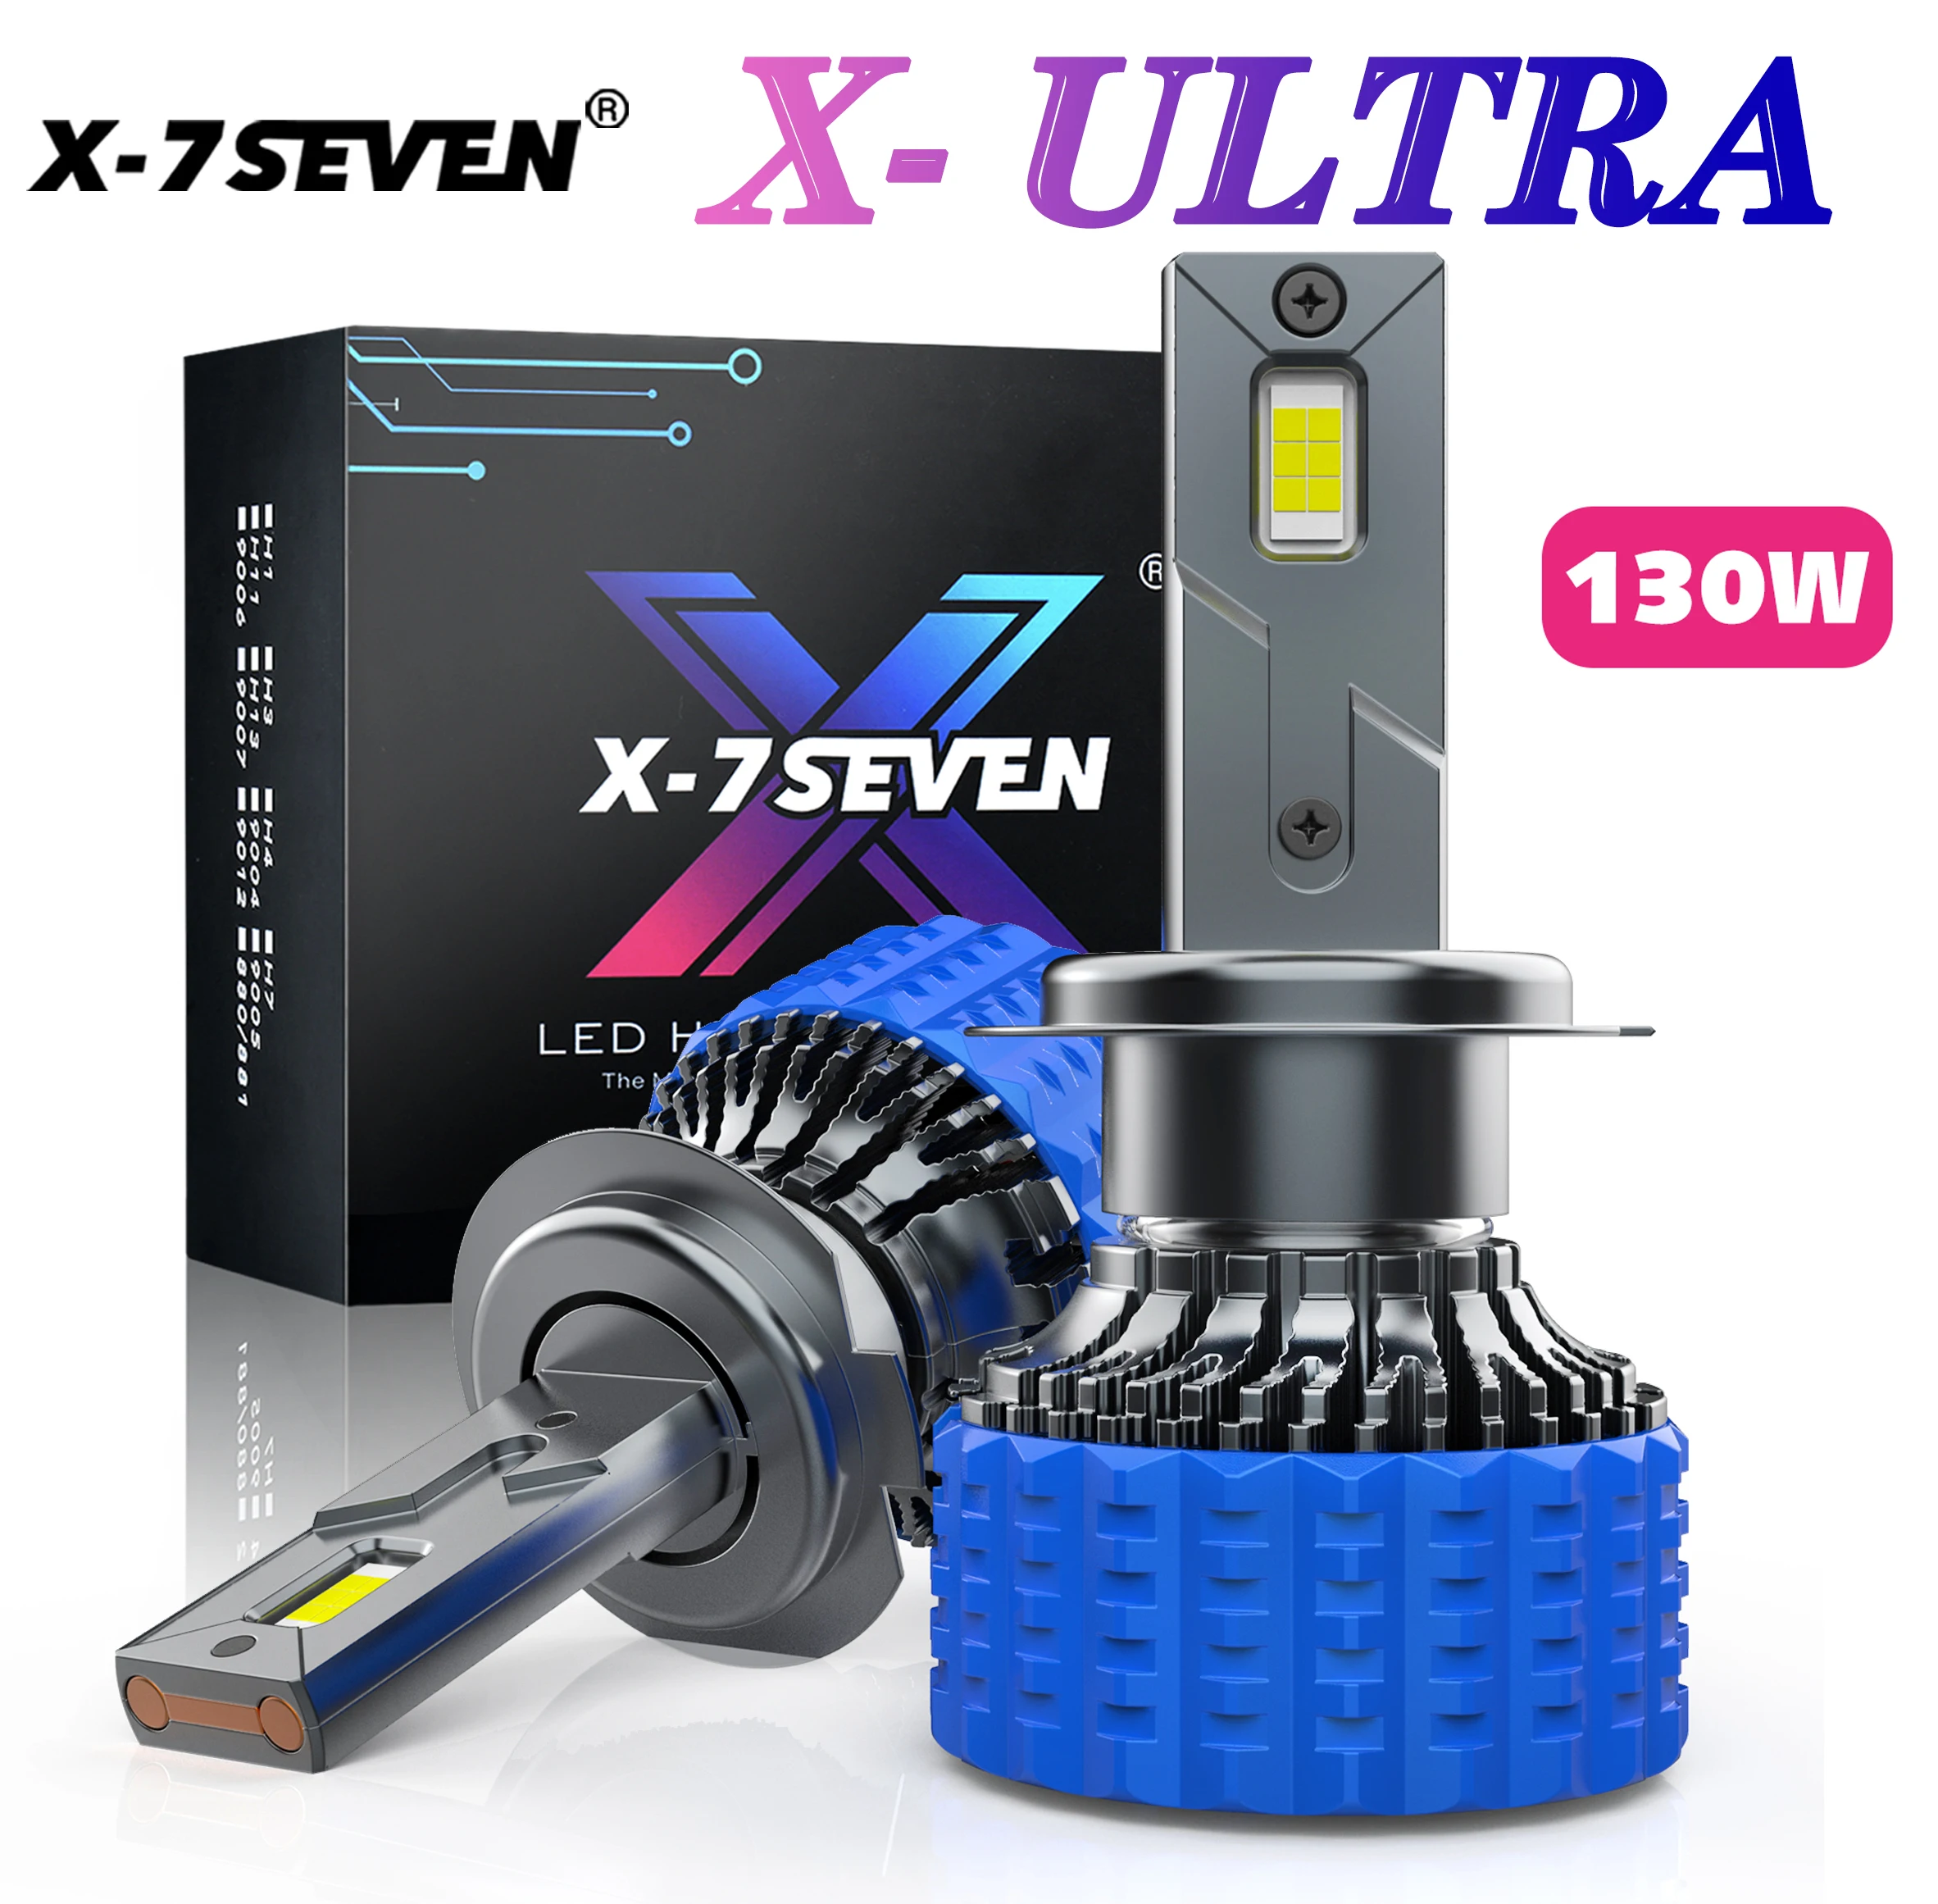 X-7SEVEN X-ULTRA 130W 6500K LED Headlight Bulbs Lamps 9004 9005 9006 9007 9012 H1 H4 H7 H11 H13